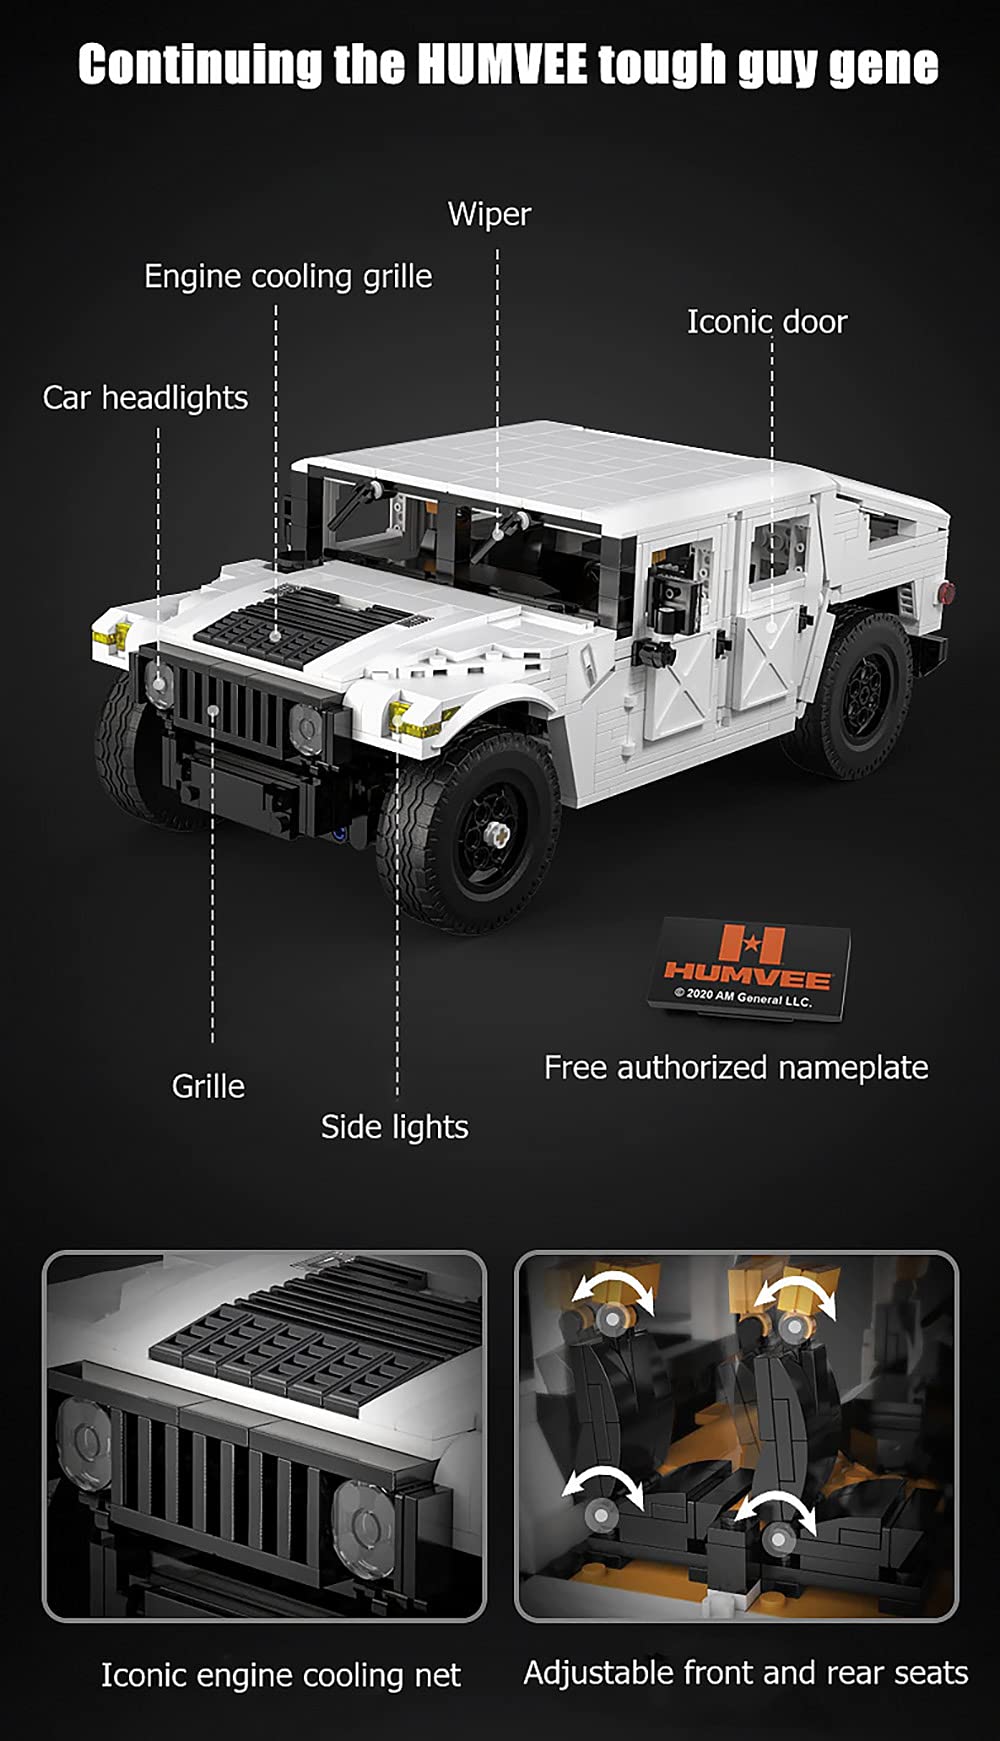 dOMOb Humvee SUV Car Building Kit – Authorized Car Model Set – 1:12 Simulated Build Vehicle – 1380 pcs Blocks – CADA Stem Bricks Toys for 8+ Age Kids & Adults – for Boys, Hobbyist, Collector